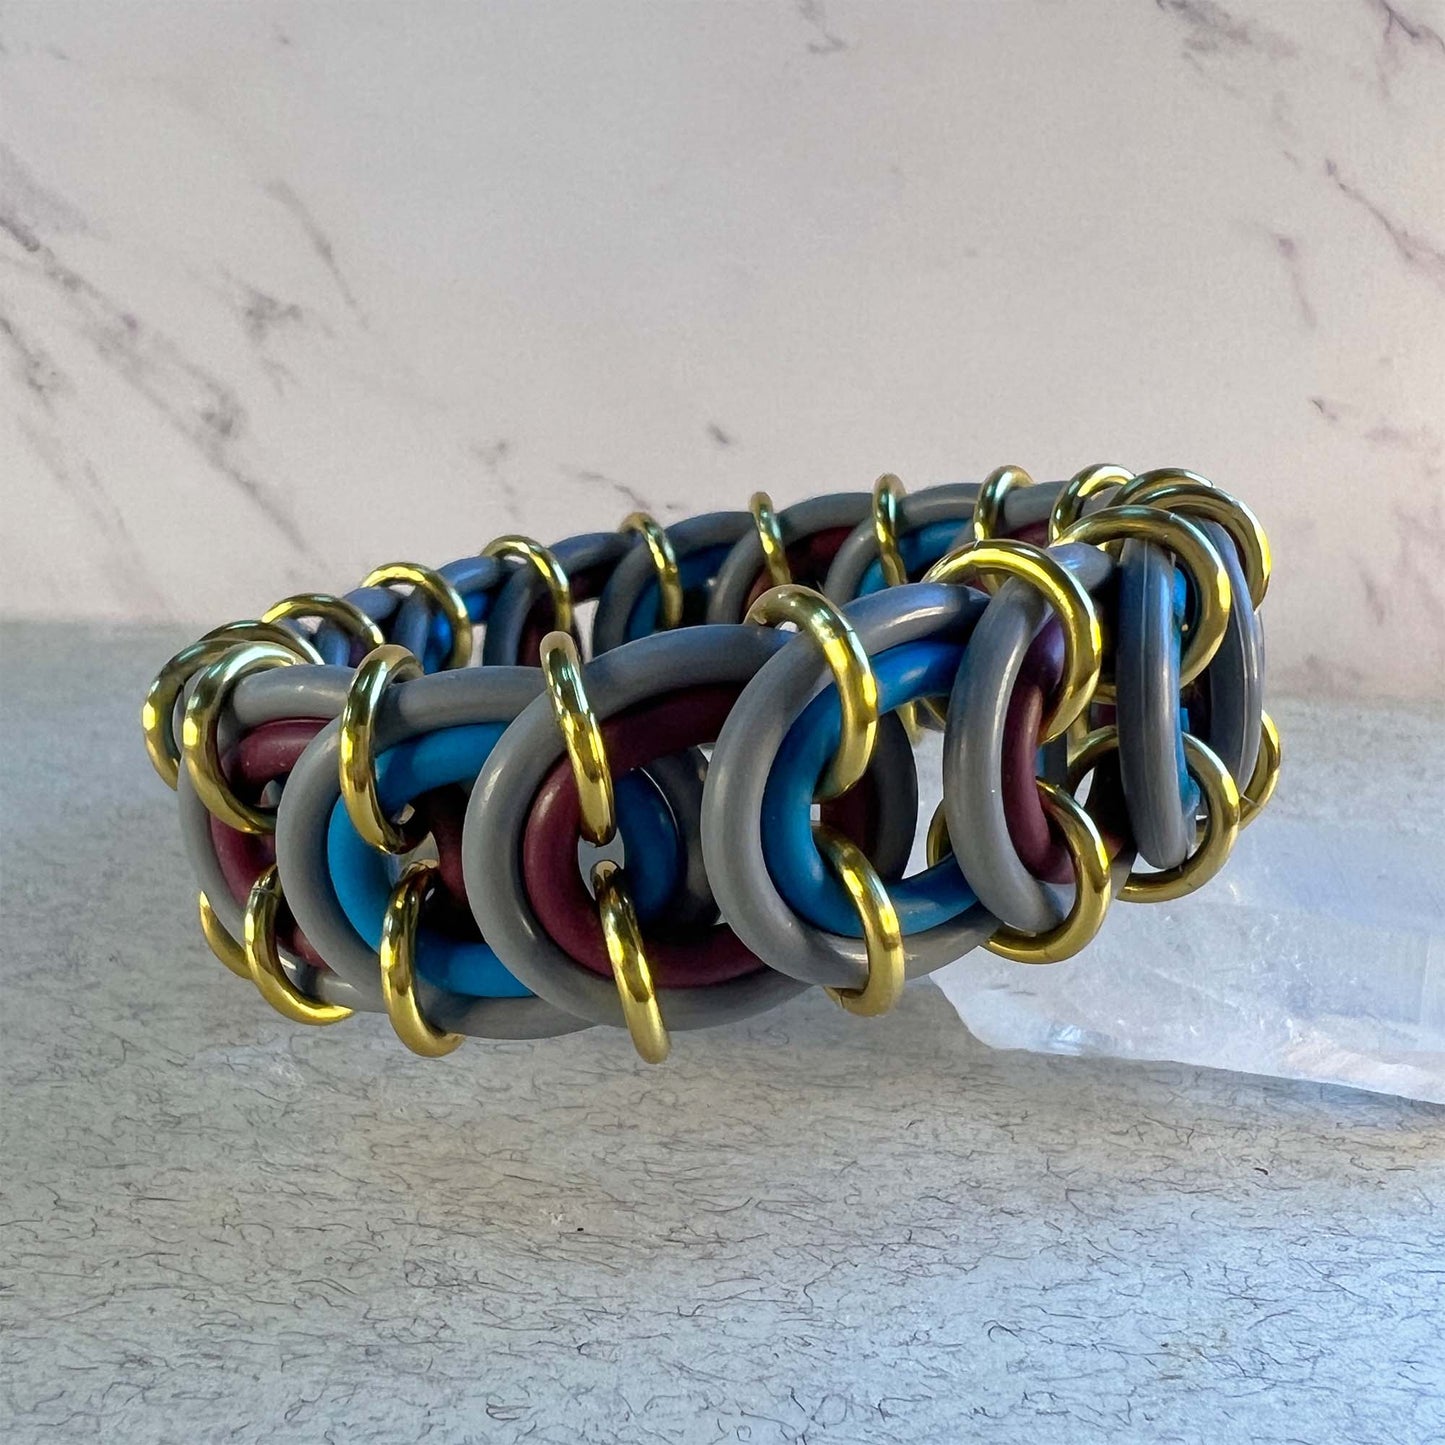 Vertebrae Stretch Bracelet Kit with FREE Video- Grey, Burgundy, Blue Wave & Gold